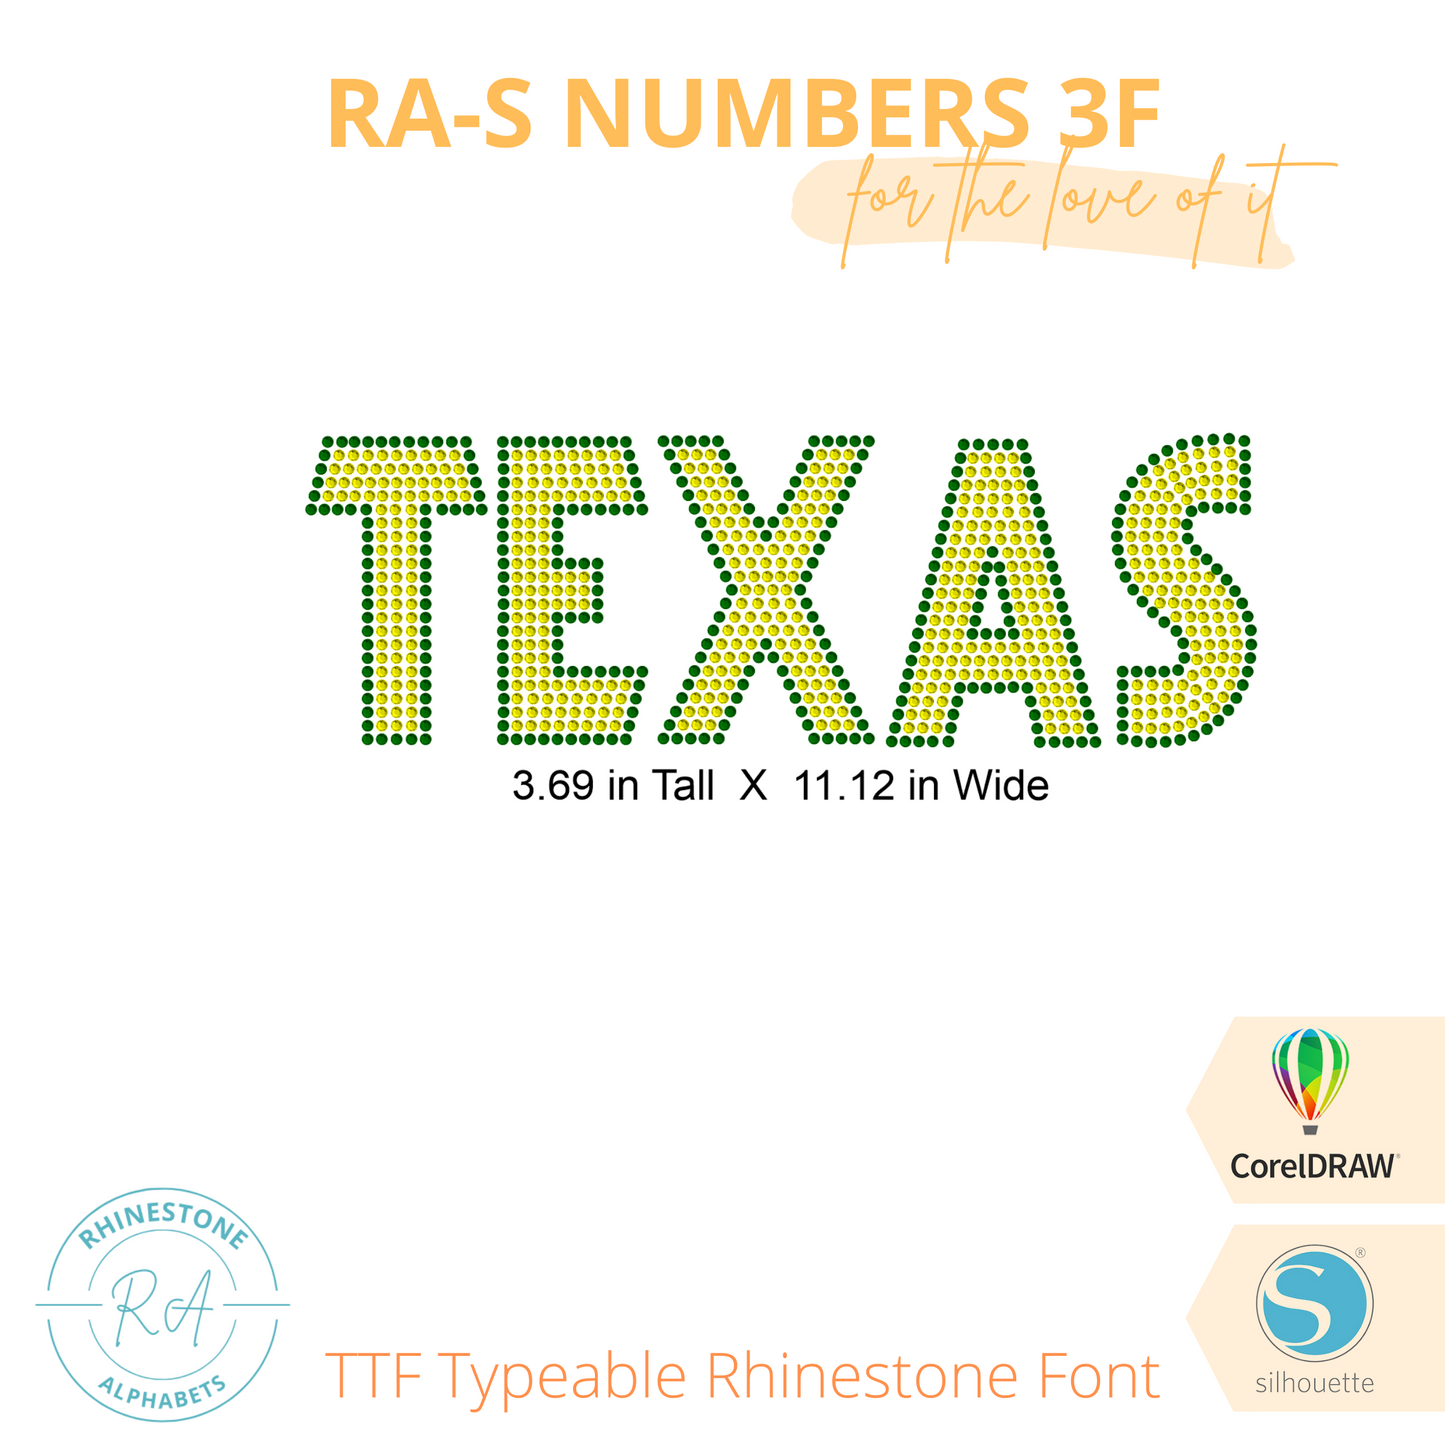 RA-S Round 3F - RhinestoneAlphabets